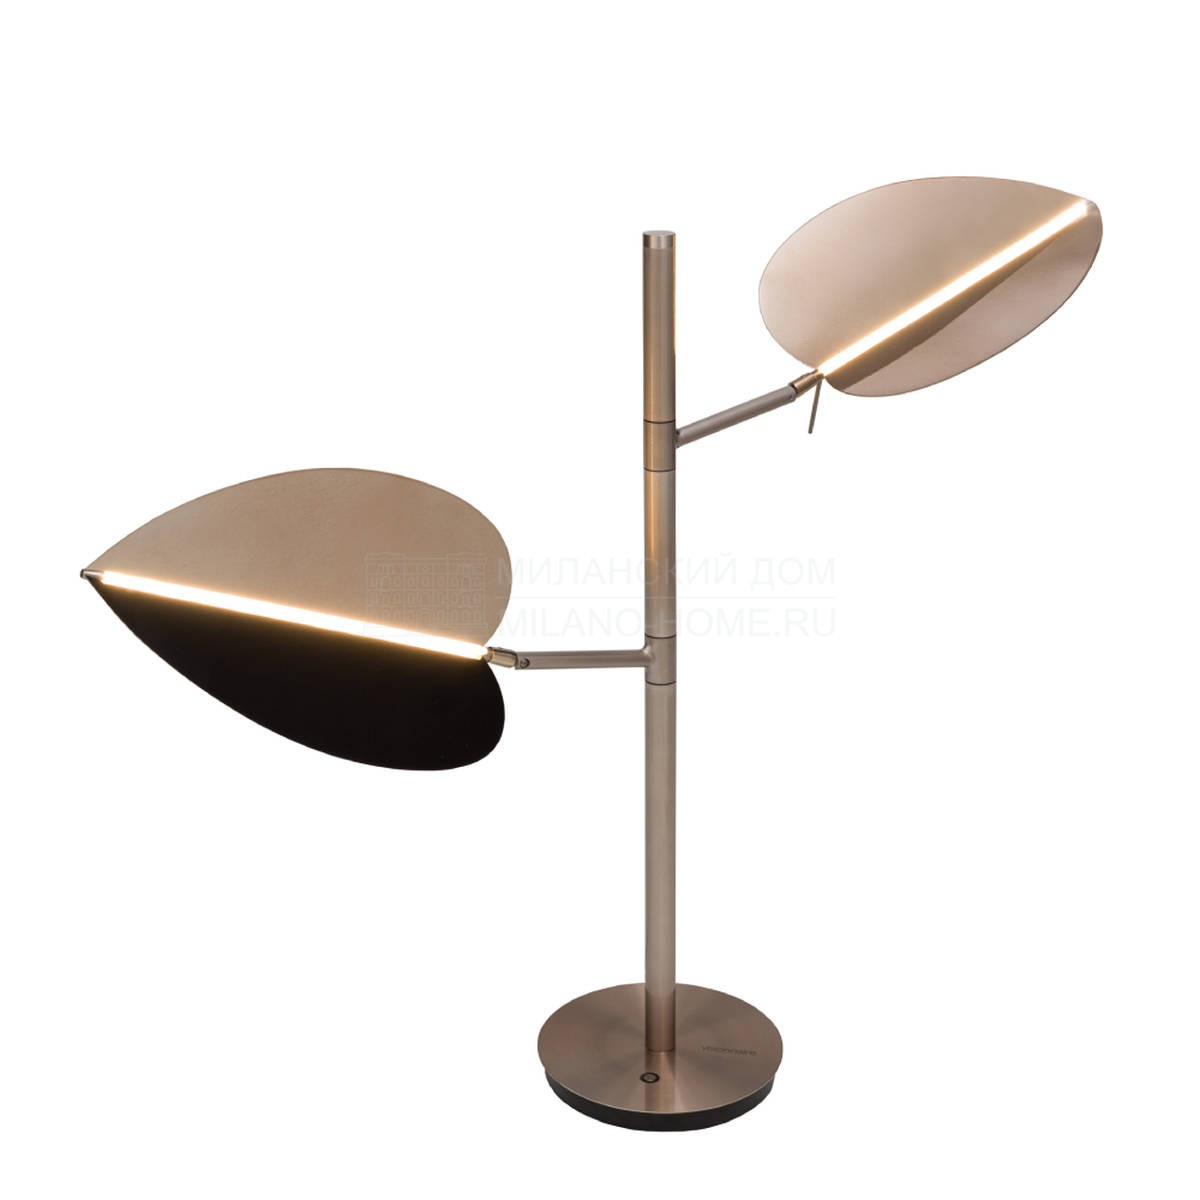 Настольная лампа Aracea table lamp из Италии фабрики IPE CAVALLI VISIONNAIRE